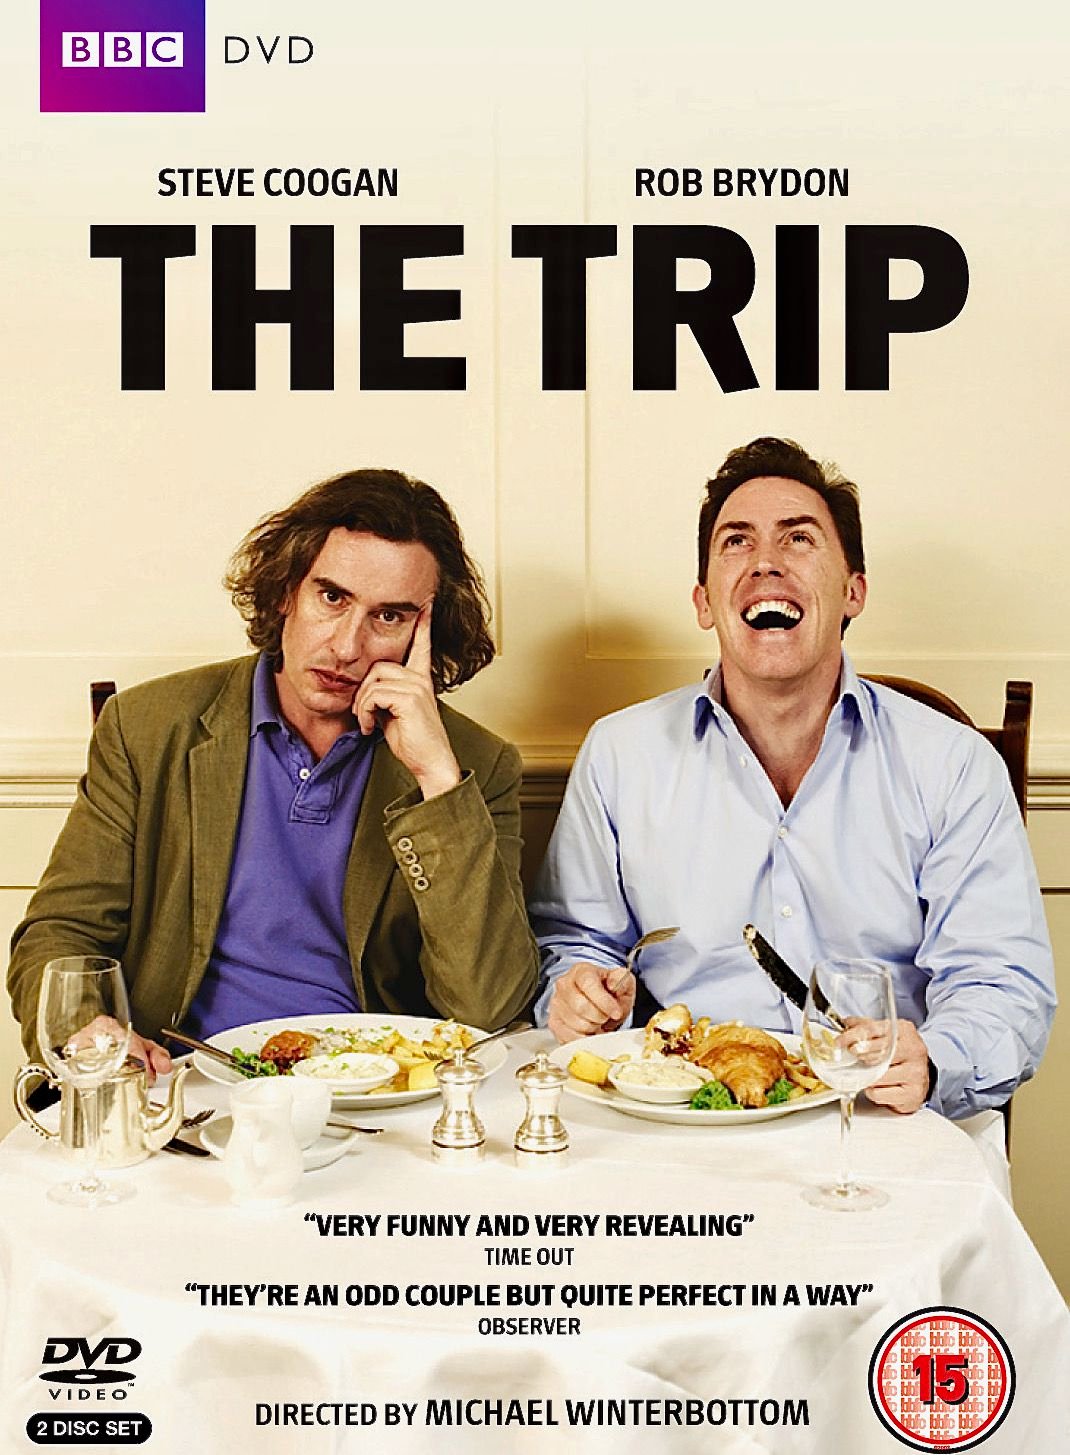 Film Club presents "The Trip"